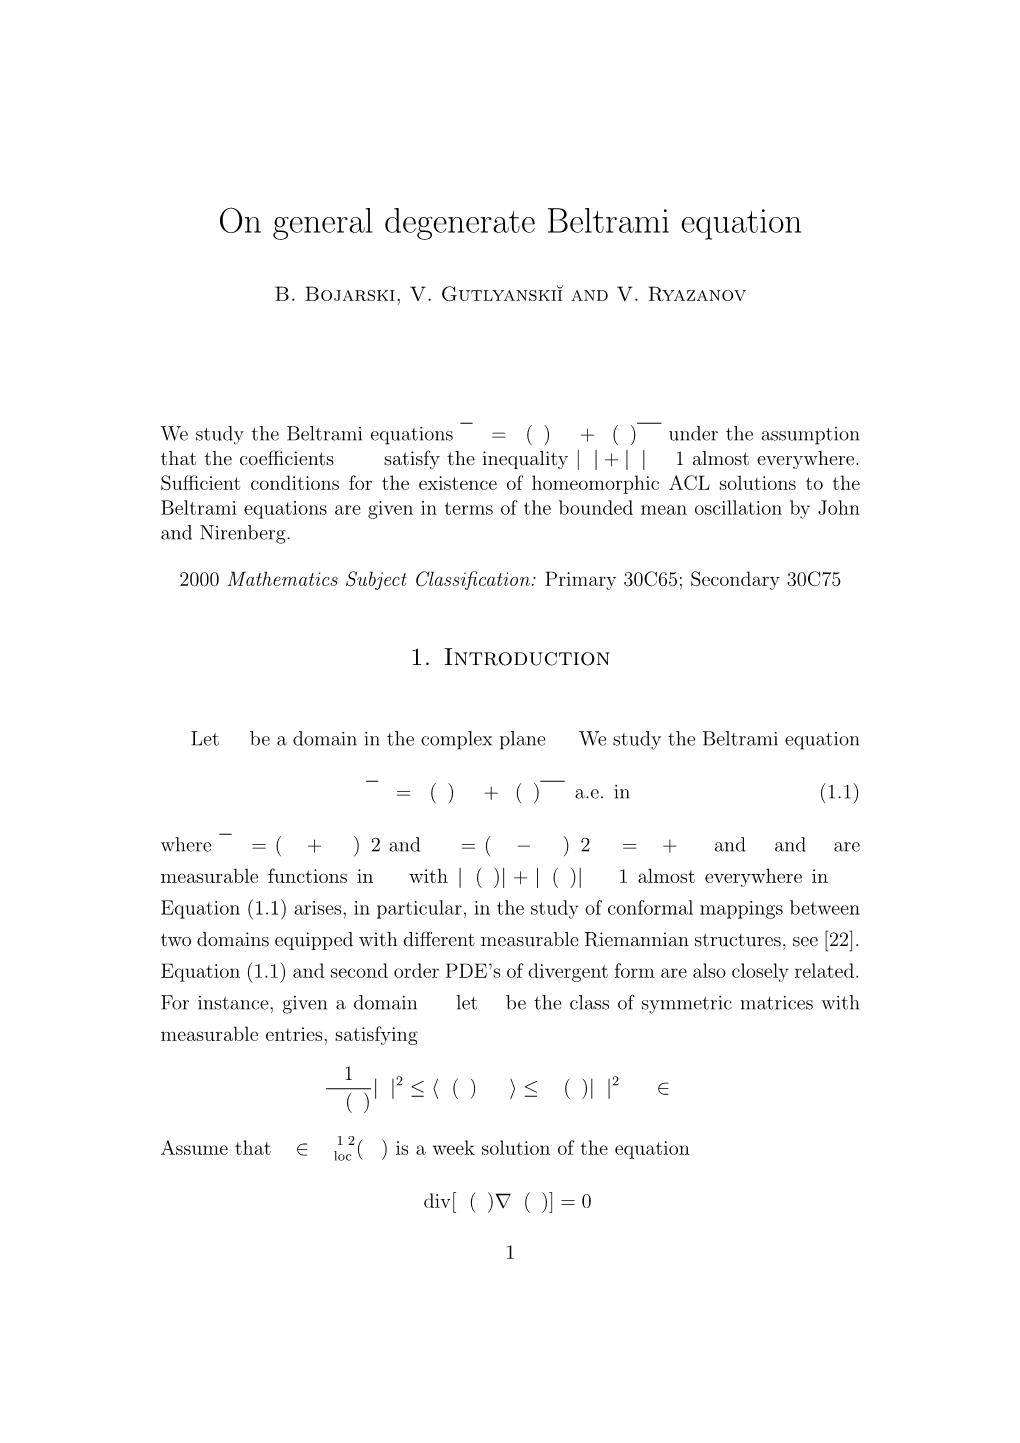 On General Degenerate Beltrami Equation